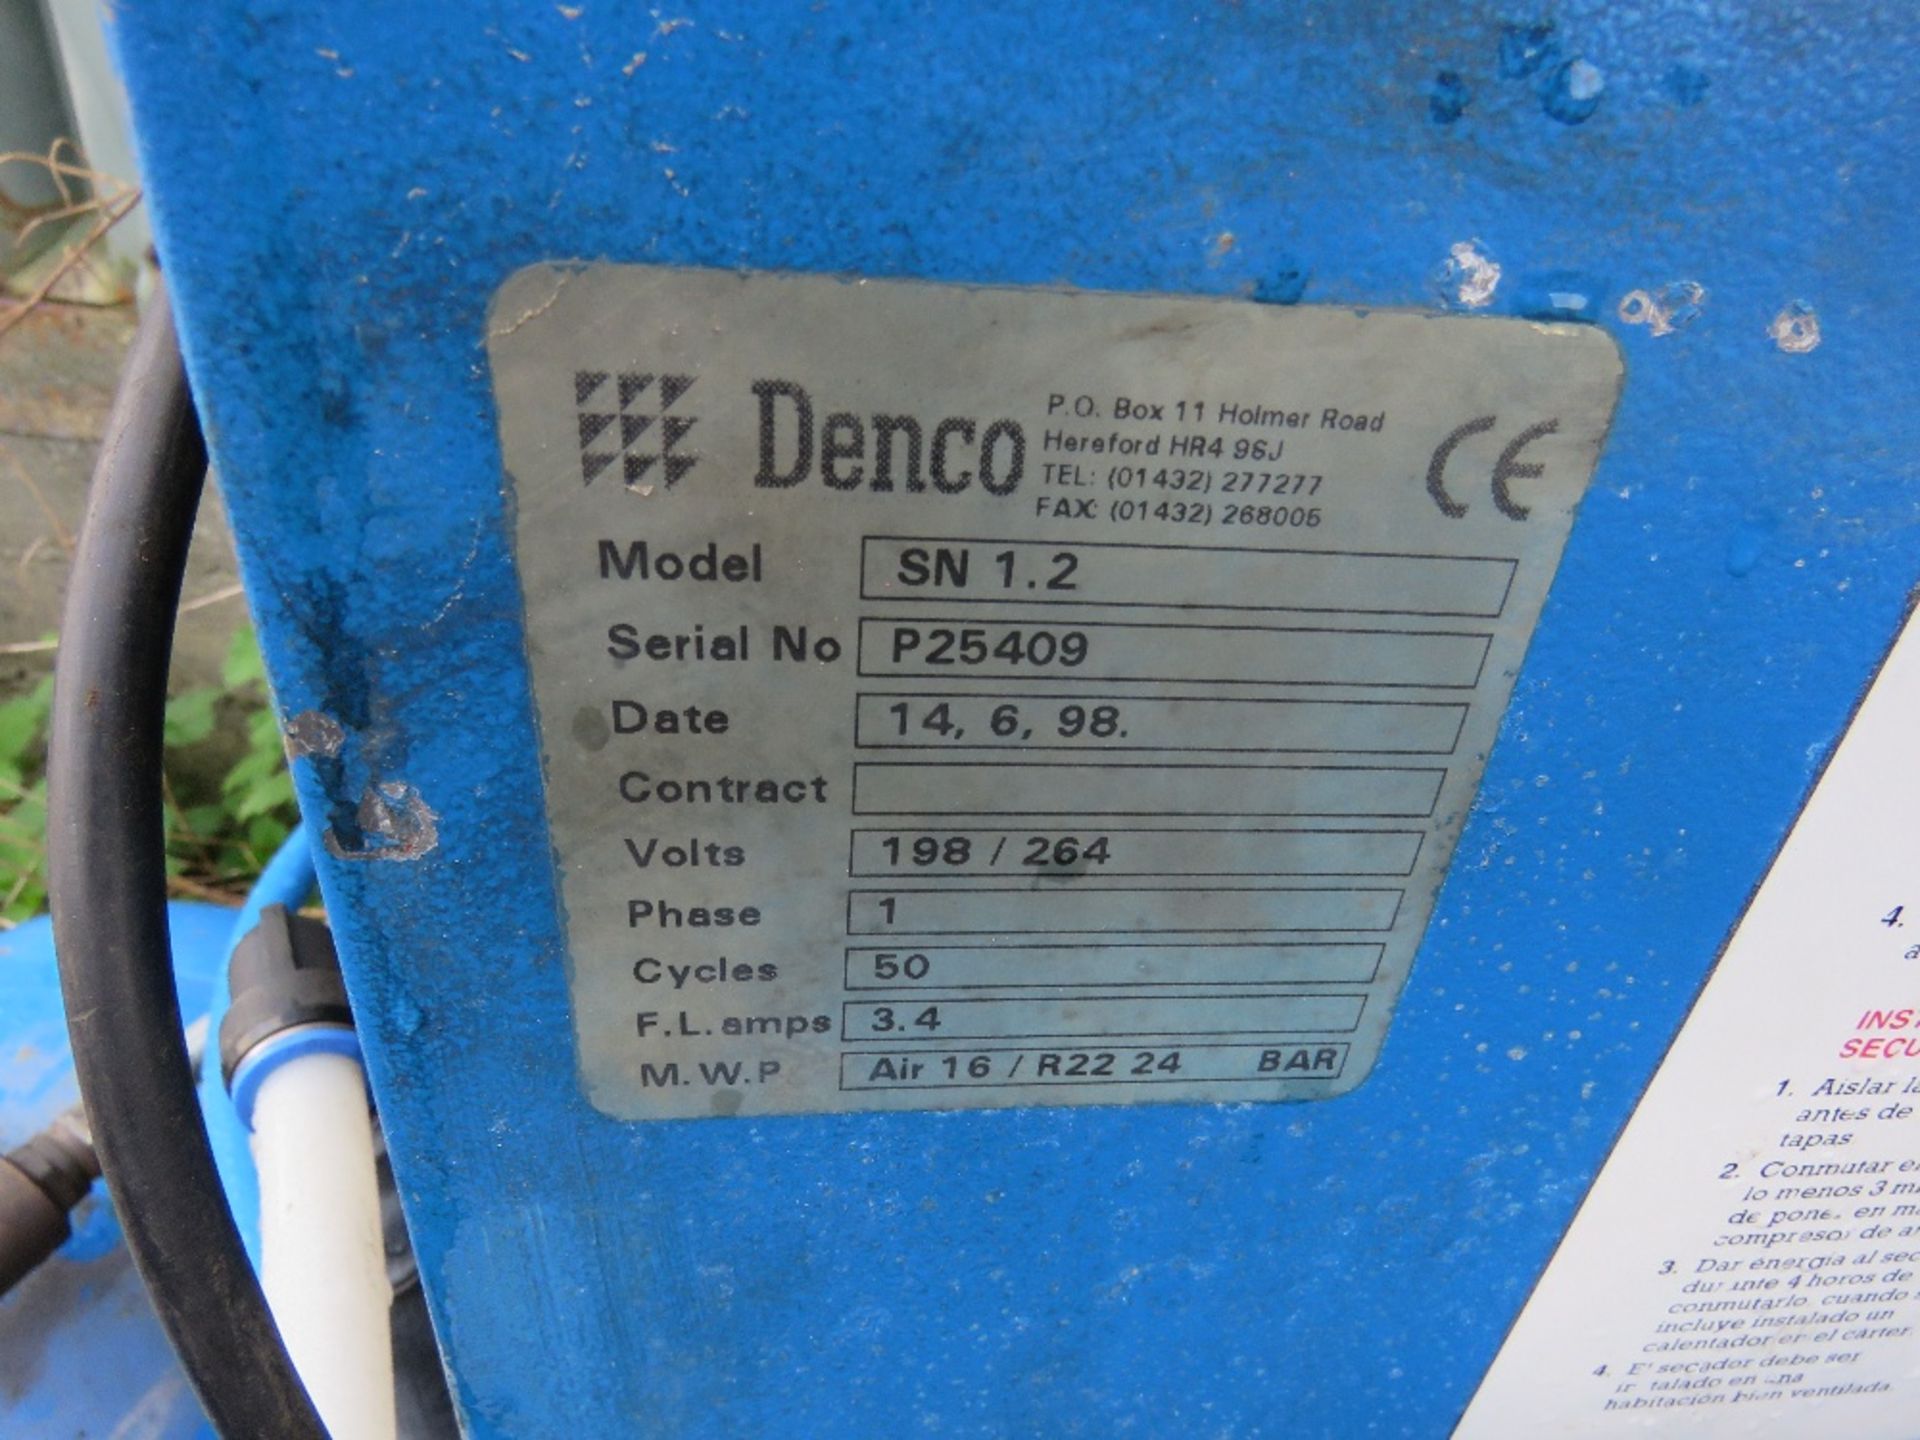 Hydrovane compressor plus Denco air drier unit - Image 4 of 4